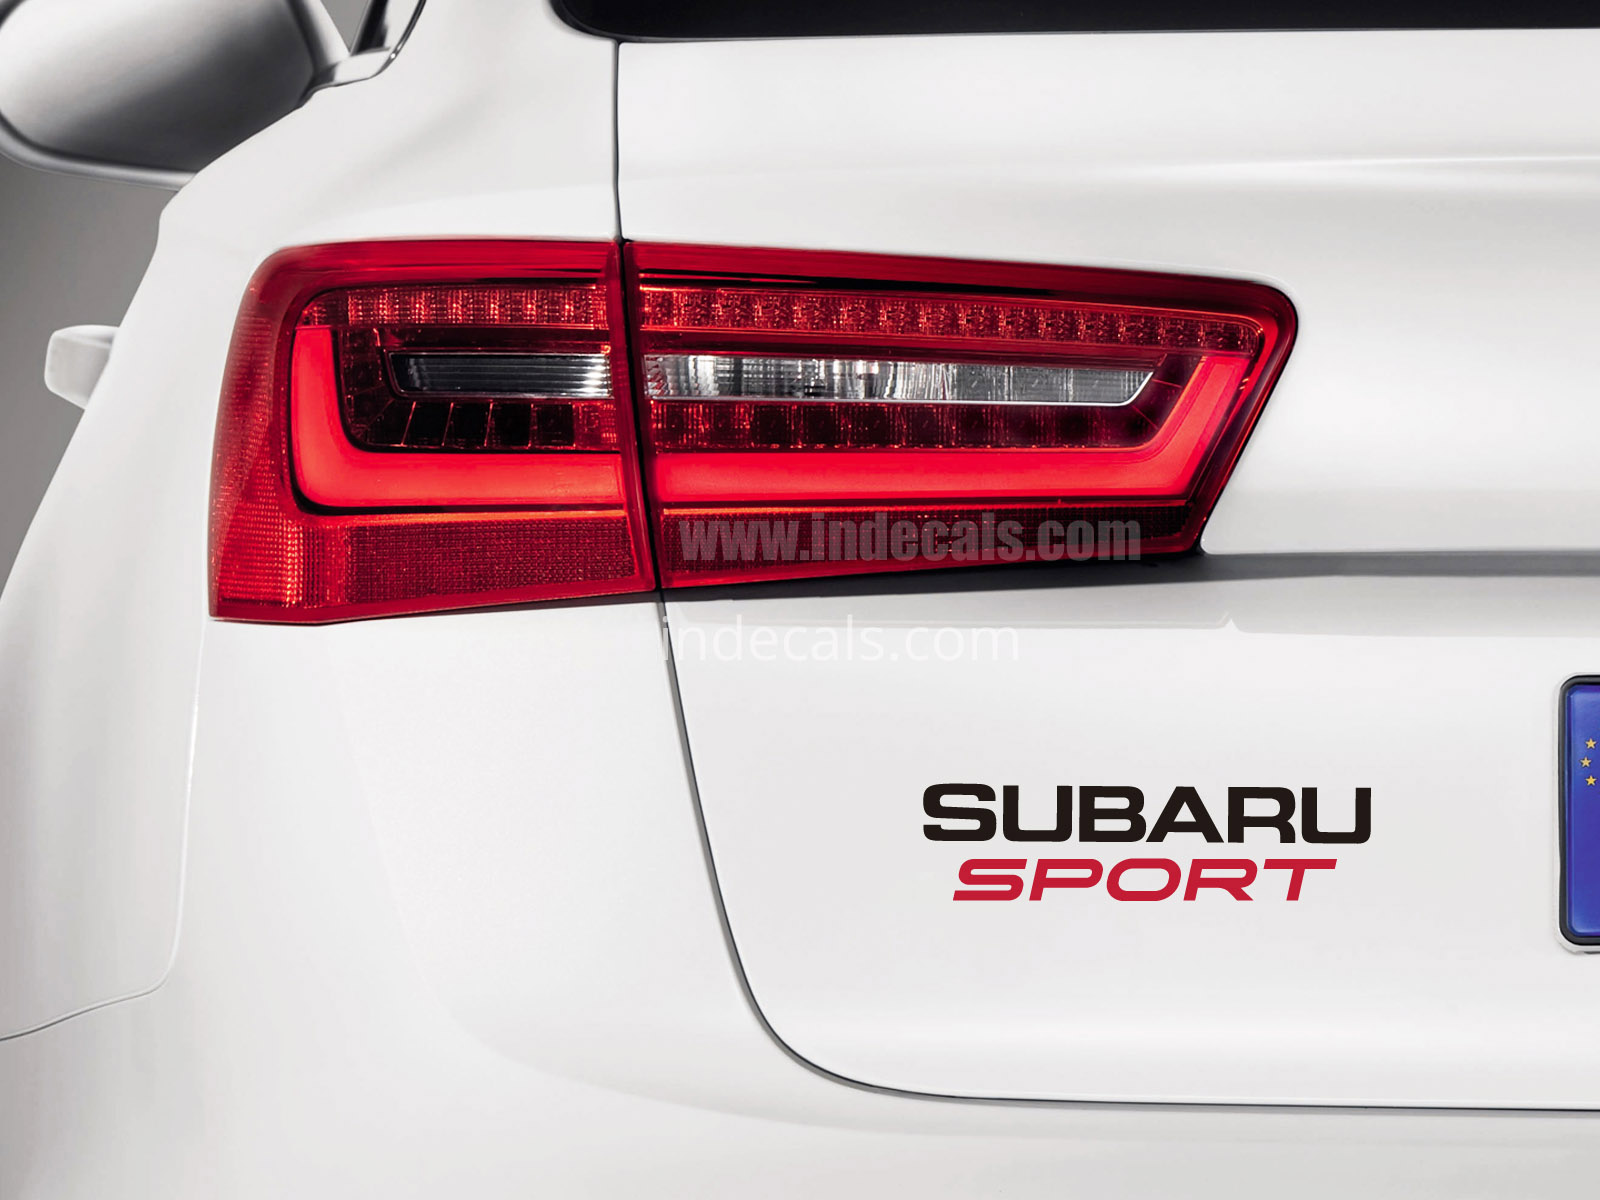 1 x Subaru Sports Sticker for Trunk - Black & Red